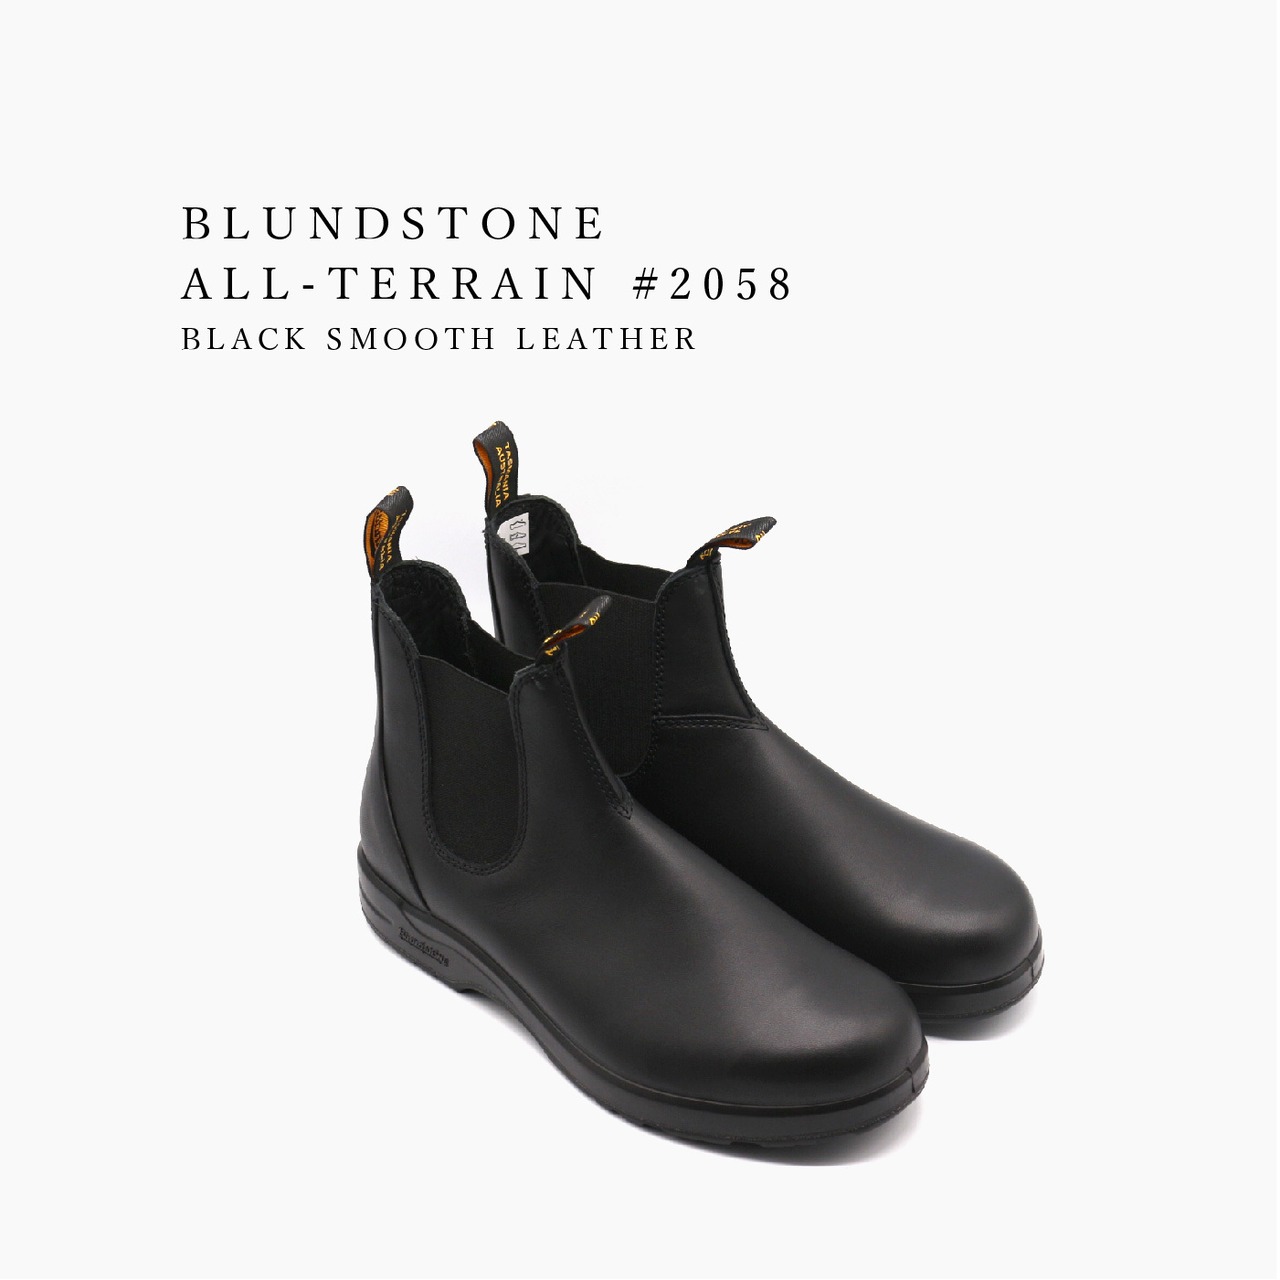 Blundstone ブランドストーン サイドゴア ブーツ チェルシーブーツ メンズ レディース ビブラム ソール ALL-TERRAIN BS 2058 009 BLACK SMOOTH LEATHER ブラック